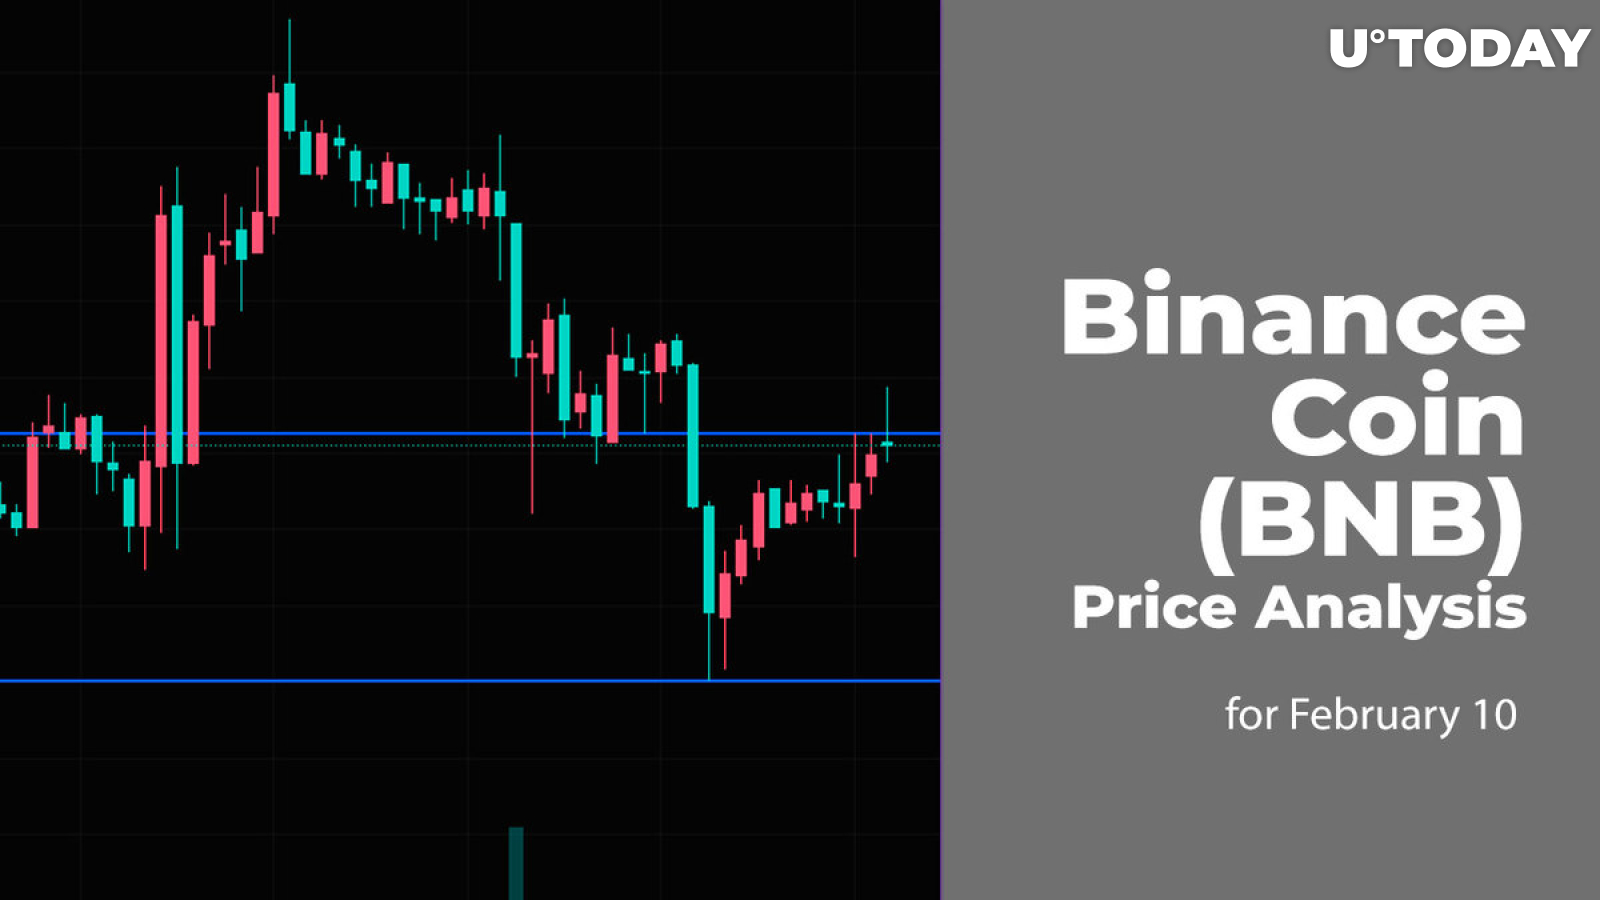 Binance Coin (BNB) Price Analysis for February 10